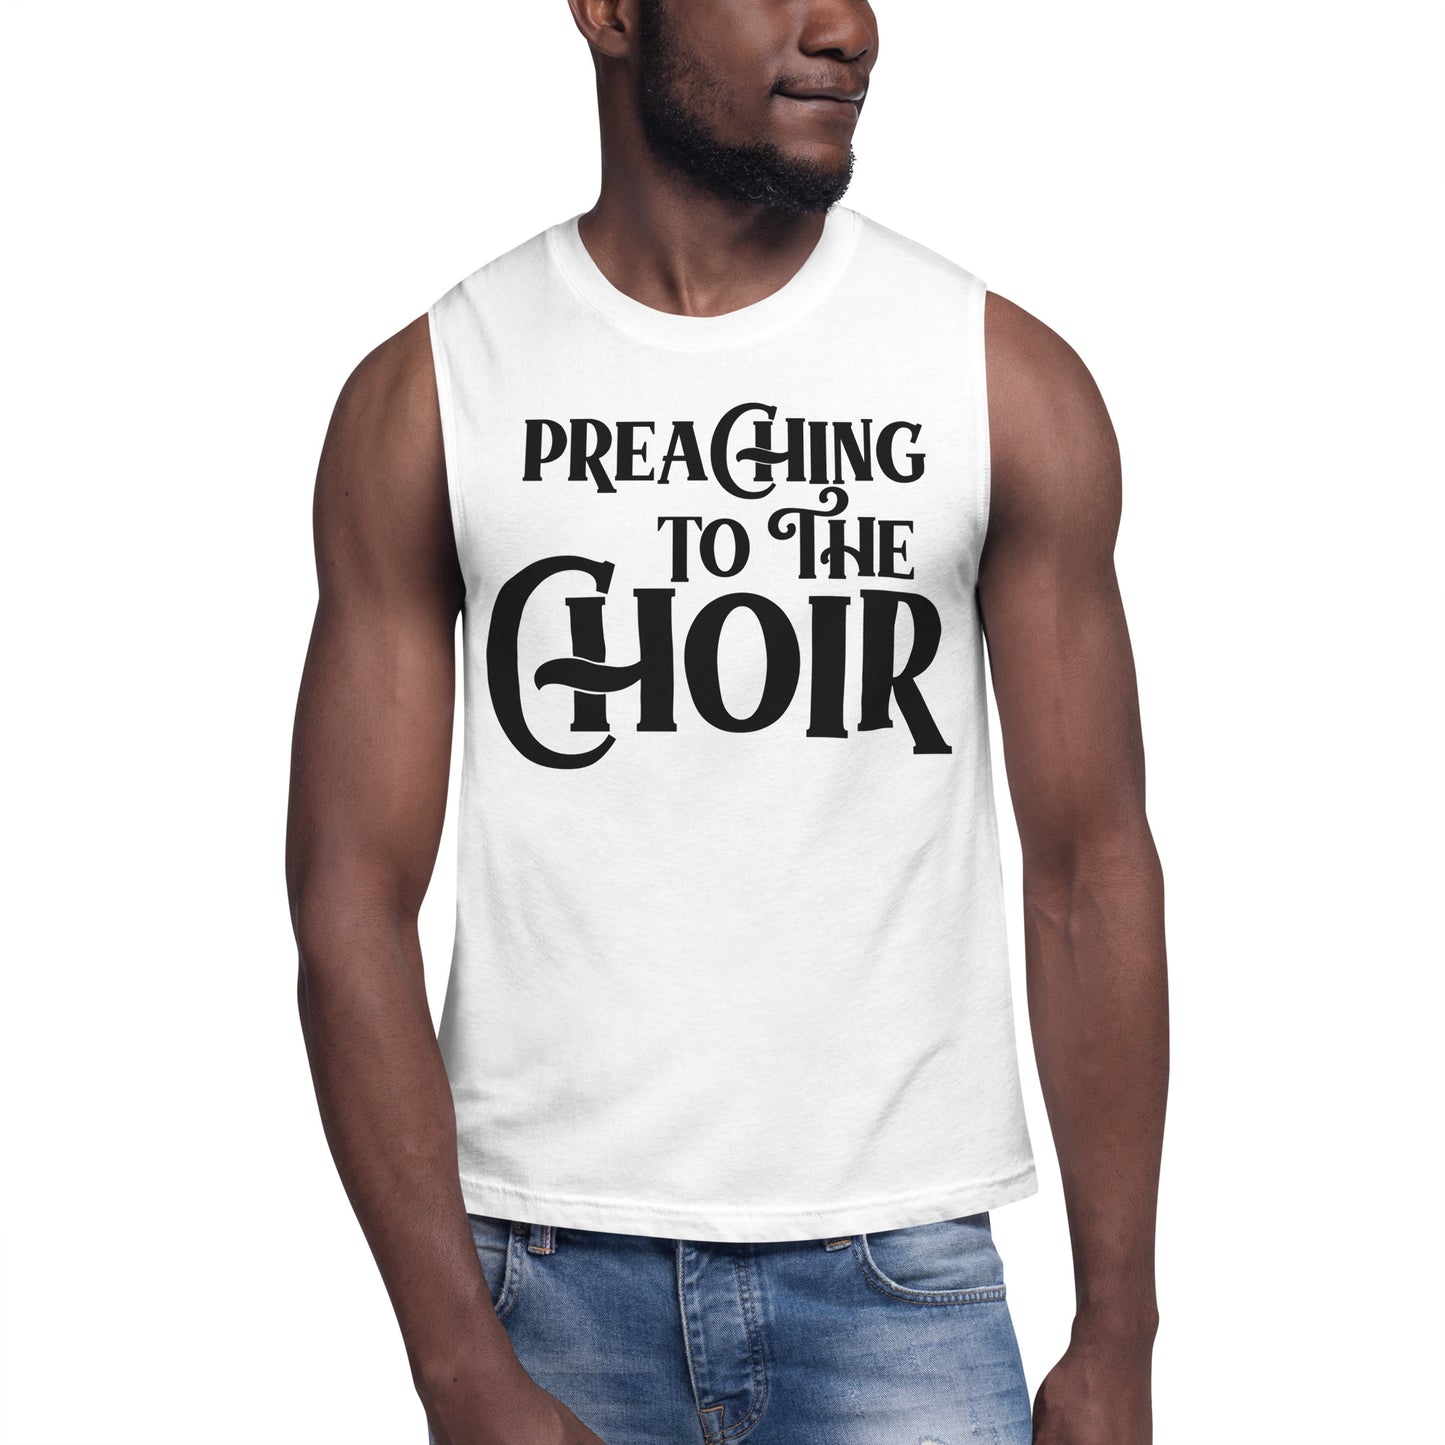 Preaching to the Choir / Unisex Muscle Shirt